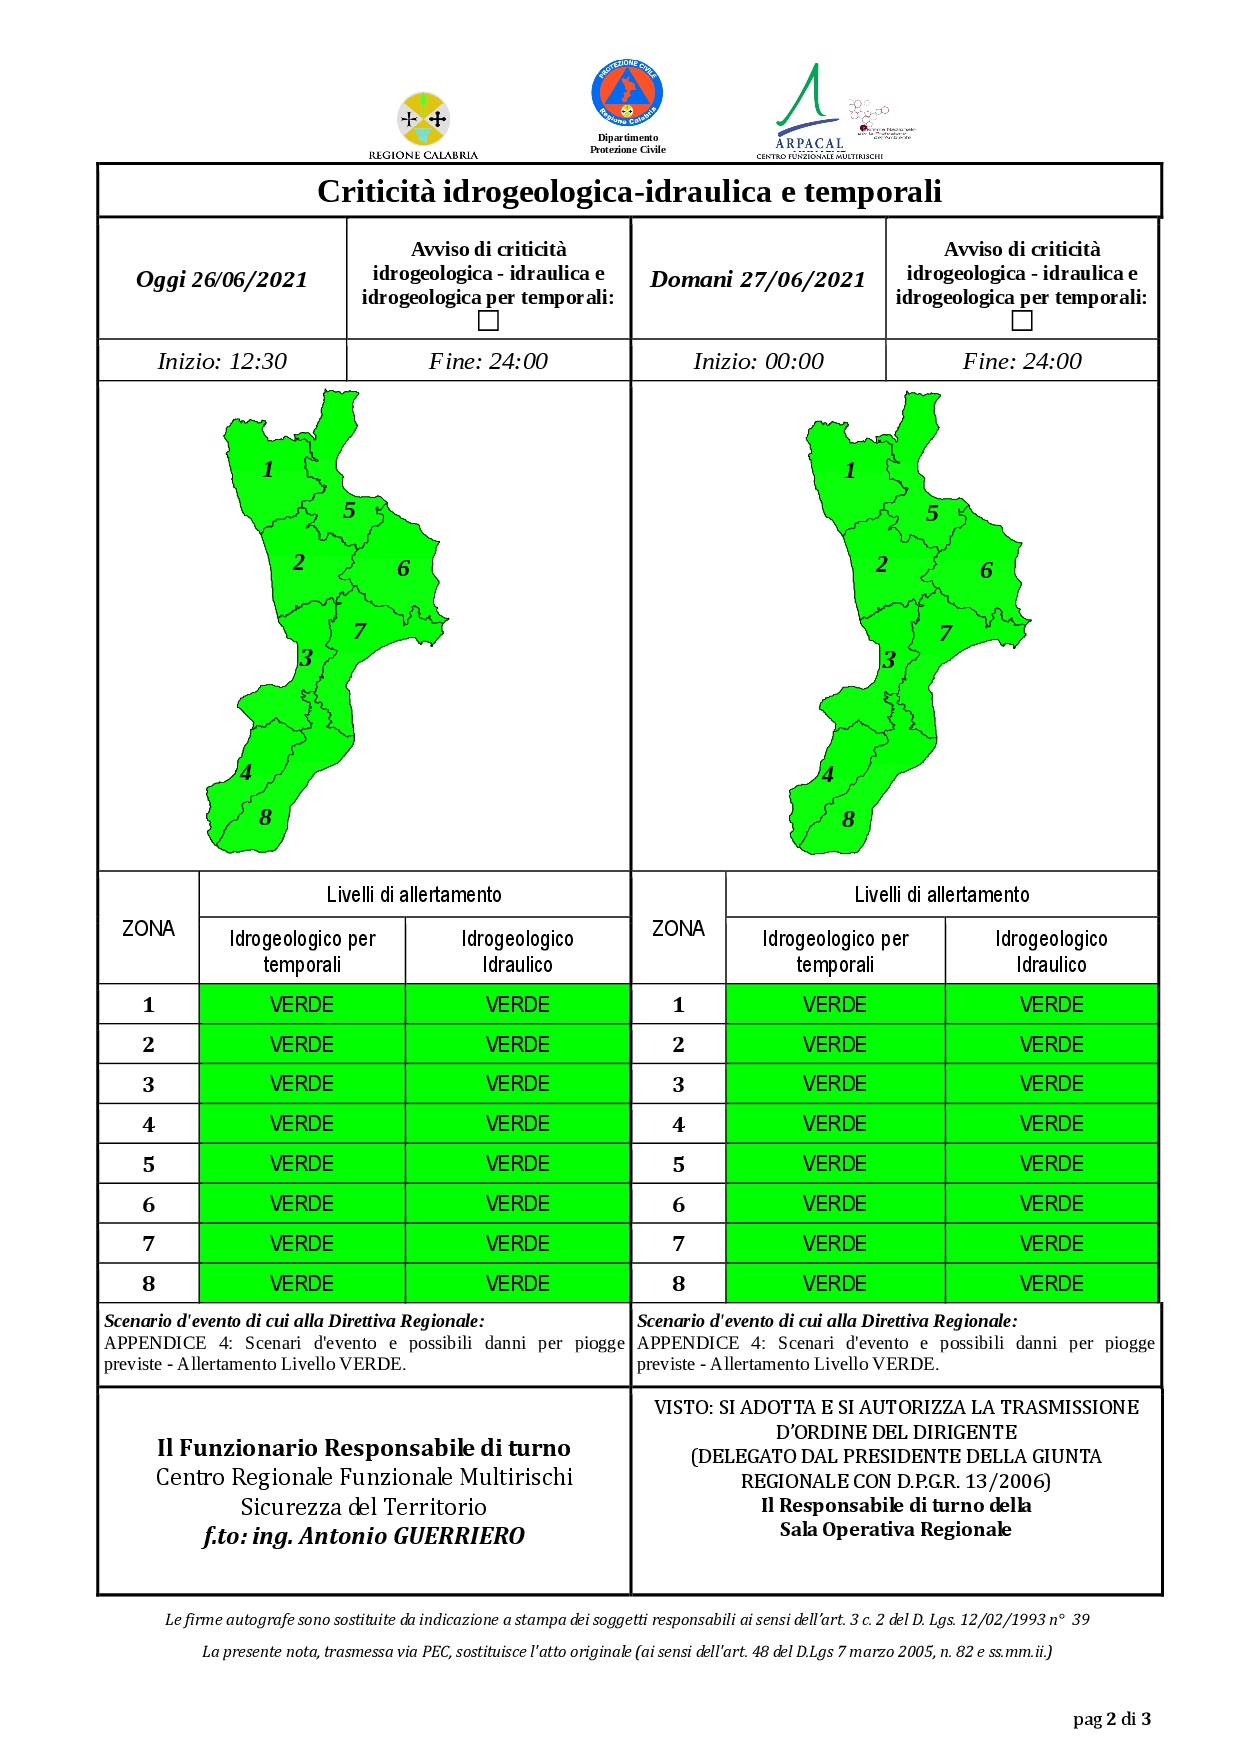 Criticità idrogeologica-idraulica e temporali in Calabria 26-06-2021